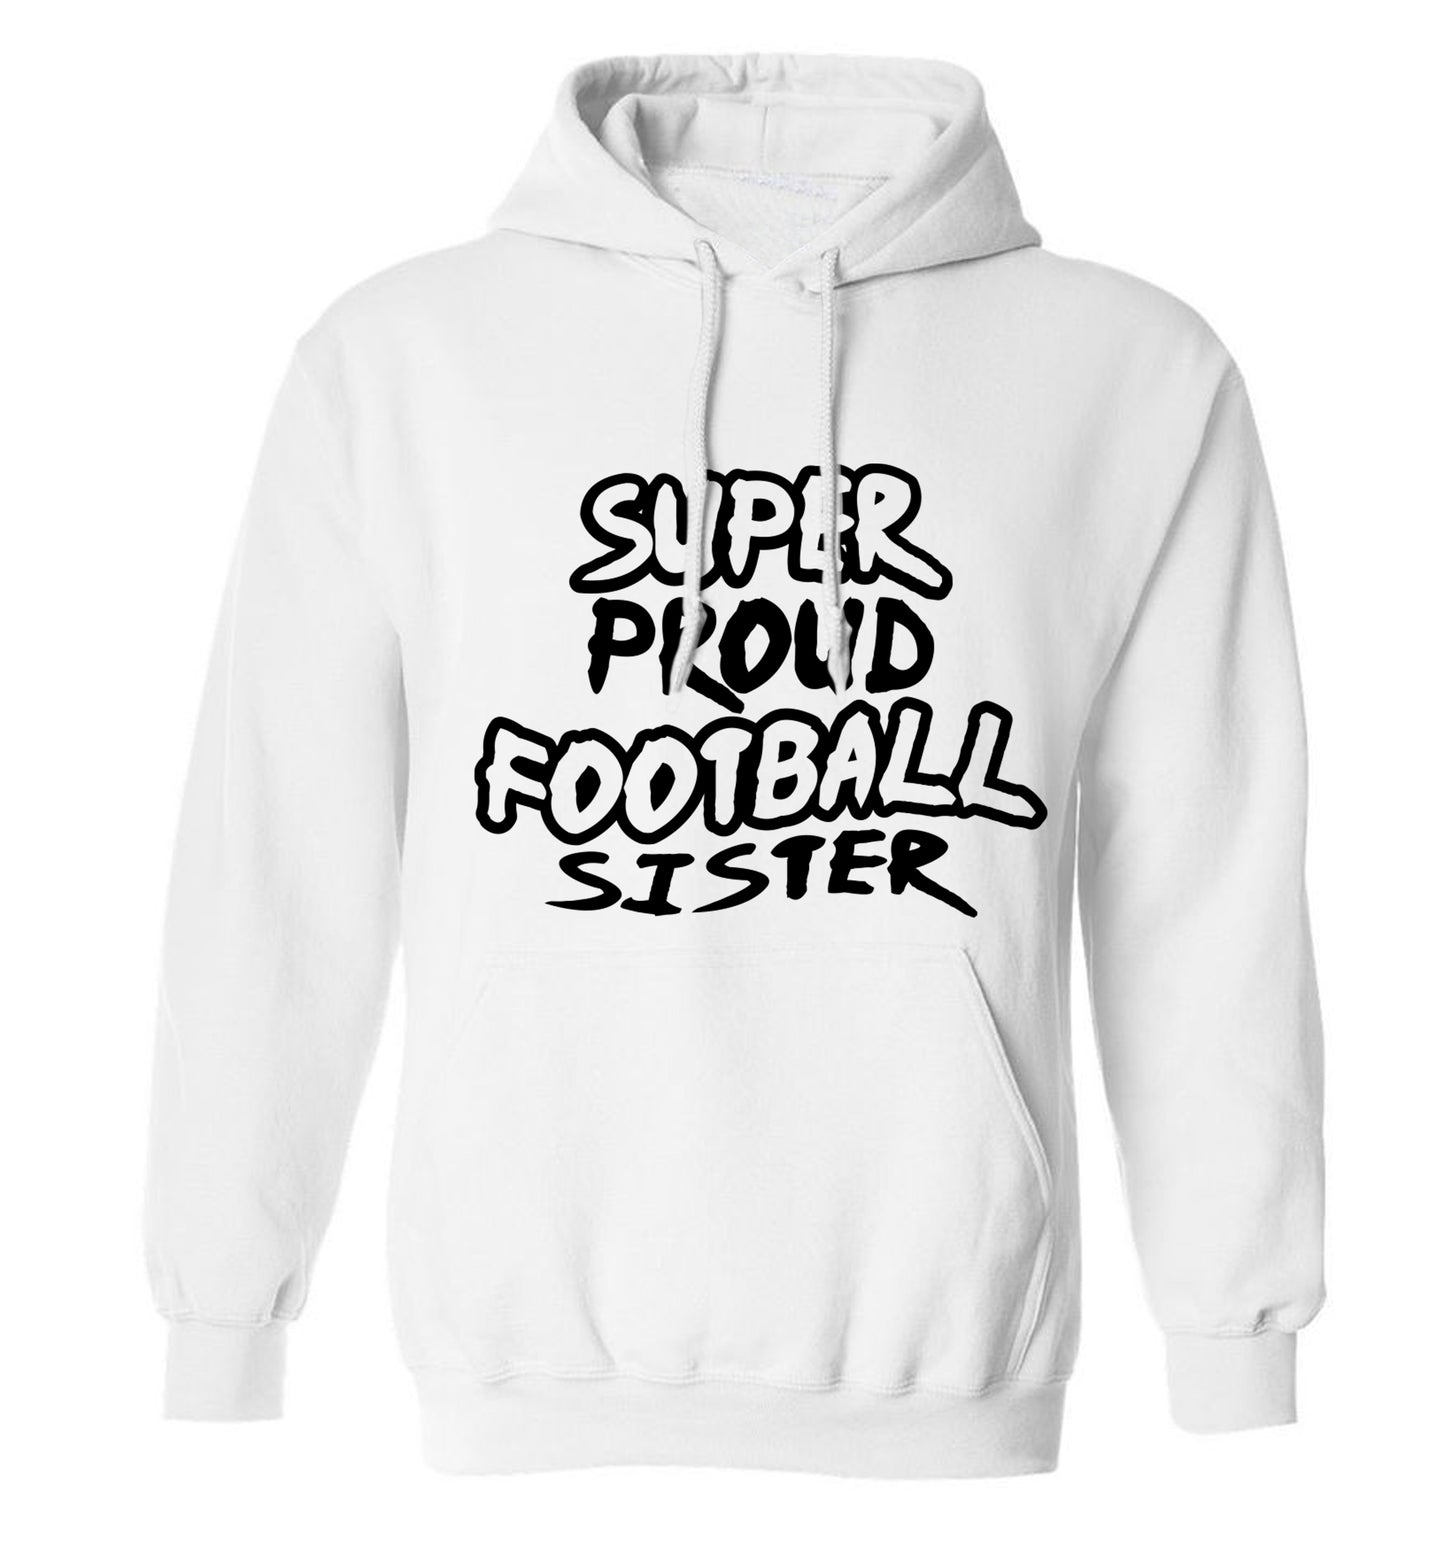 Super proud football sister adults unisexwhite hoodie 2XL